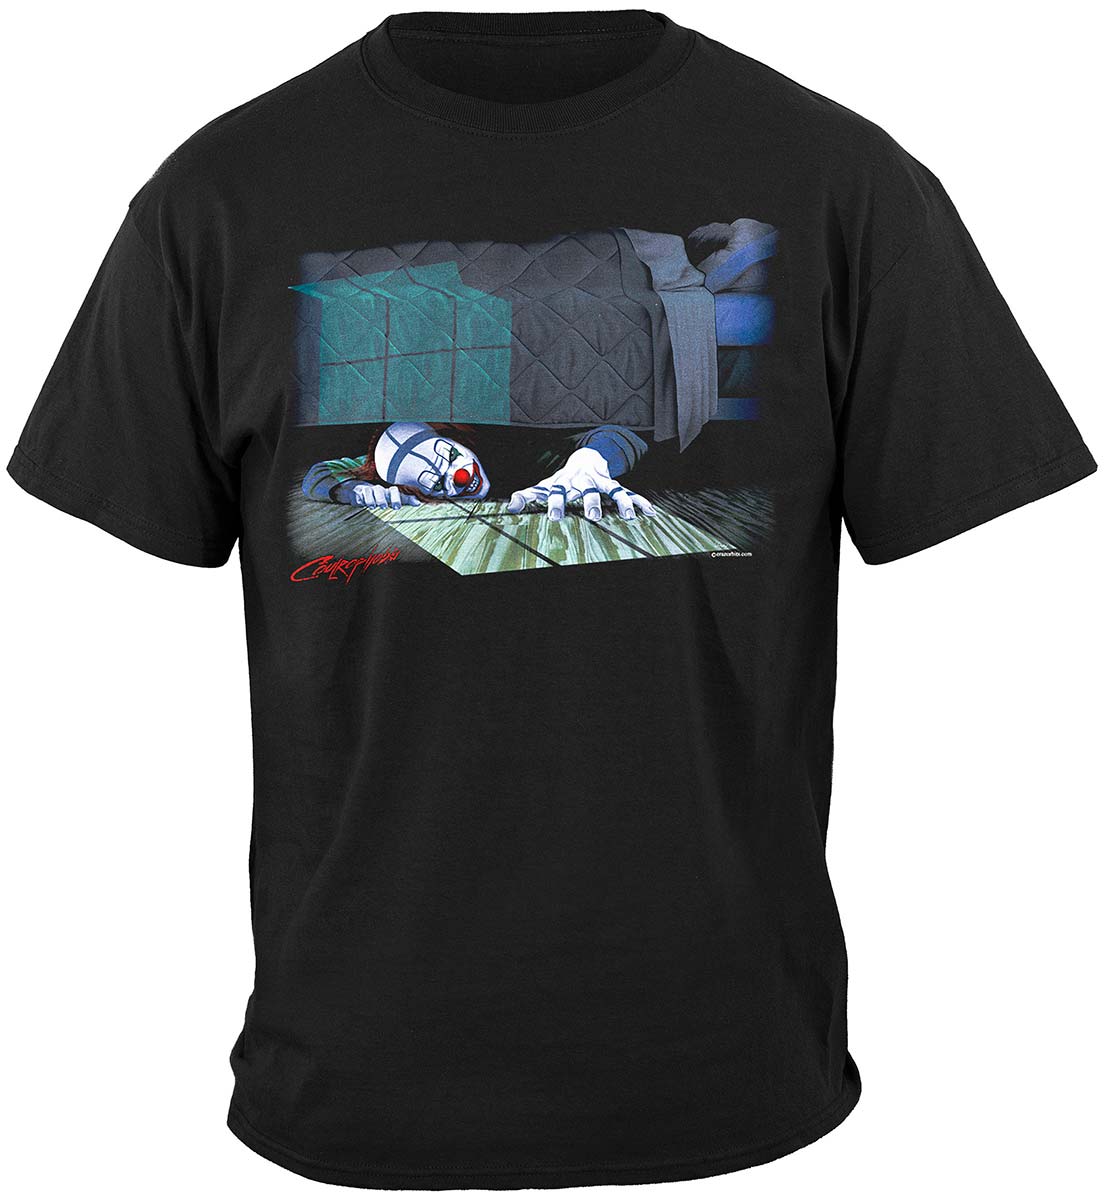 Evil Clown Under Bed T-Shirt